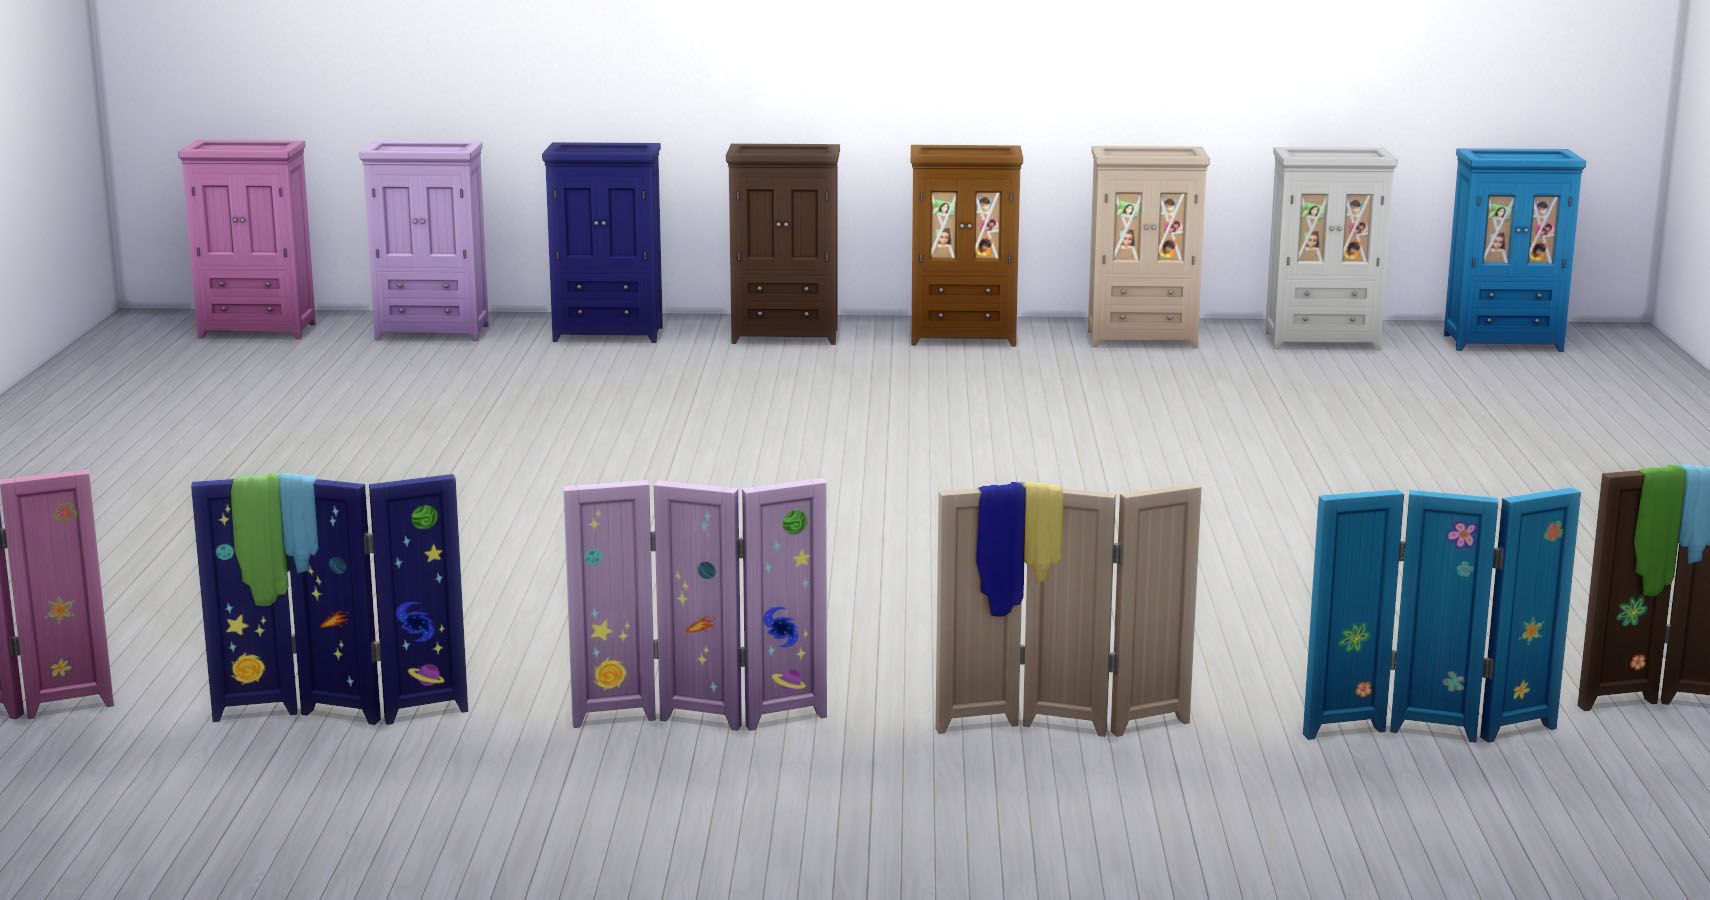 sims 4 kids room stuff has a lootbox